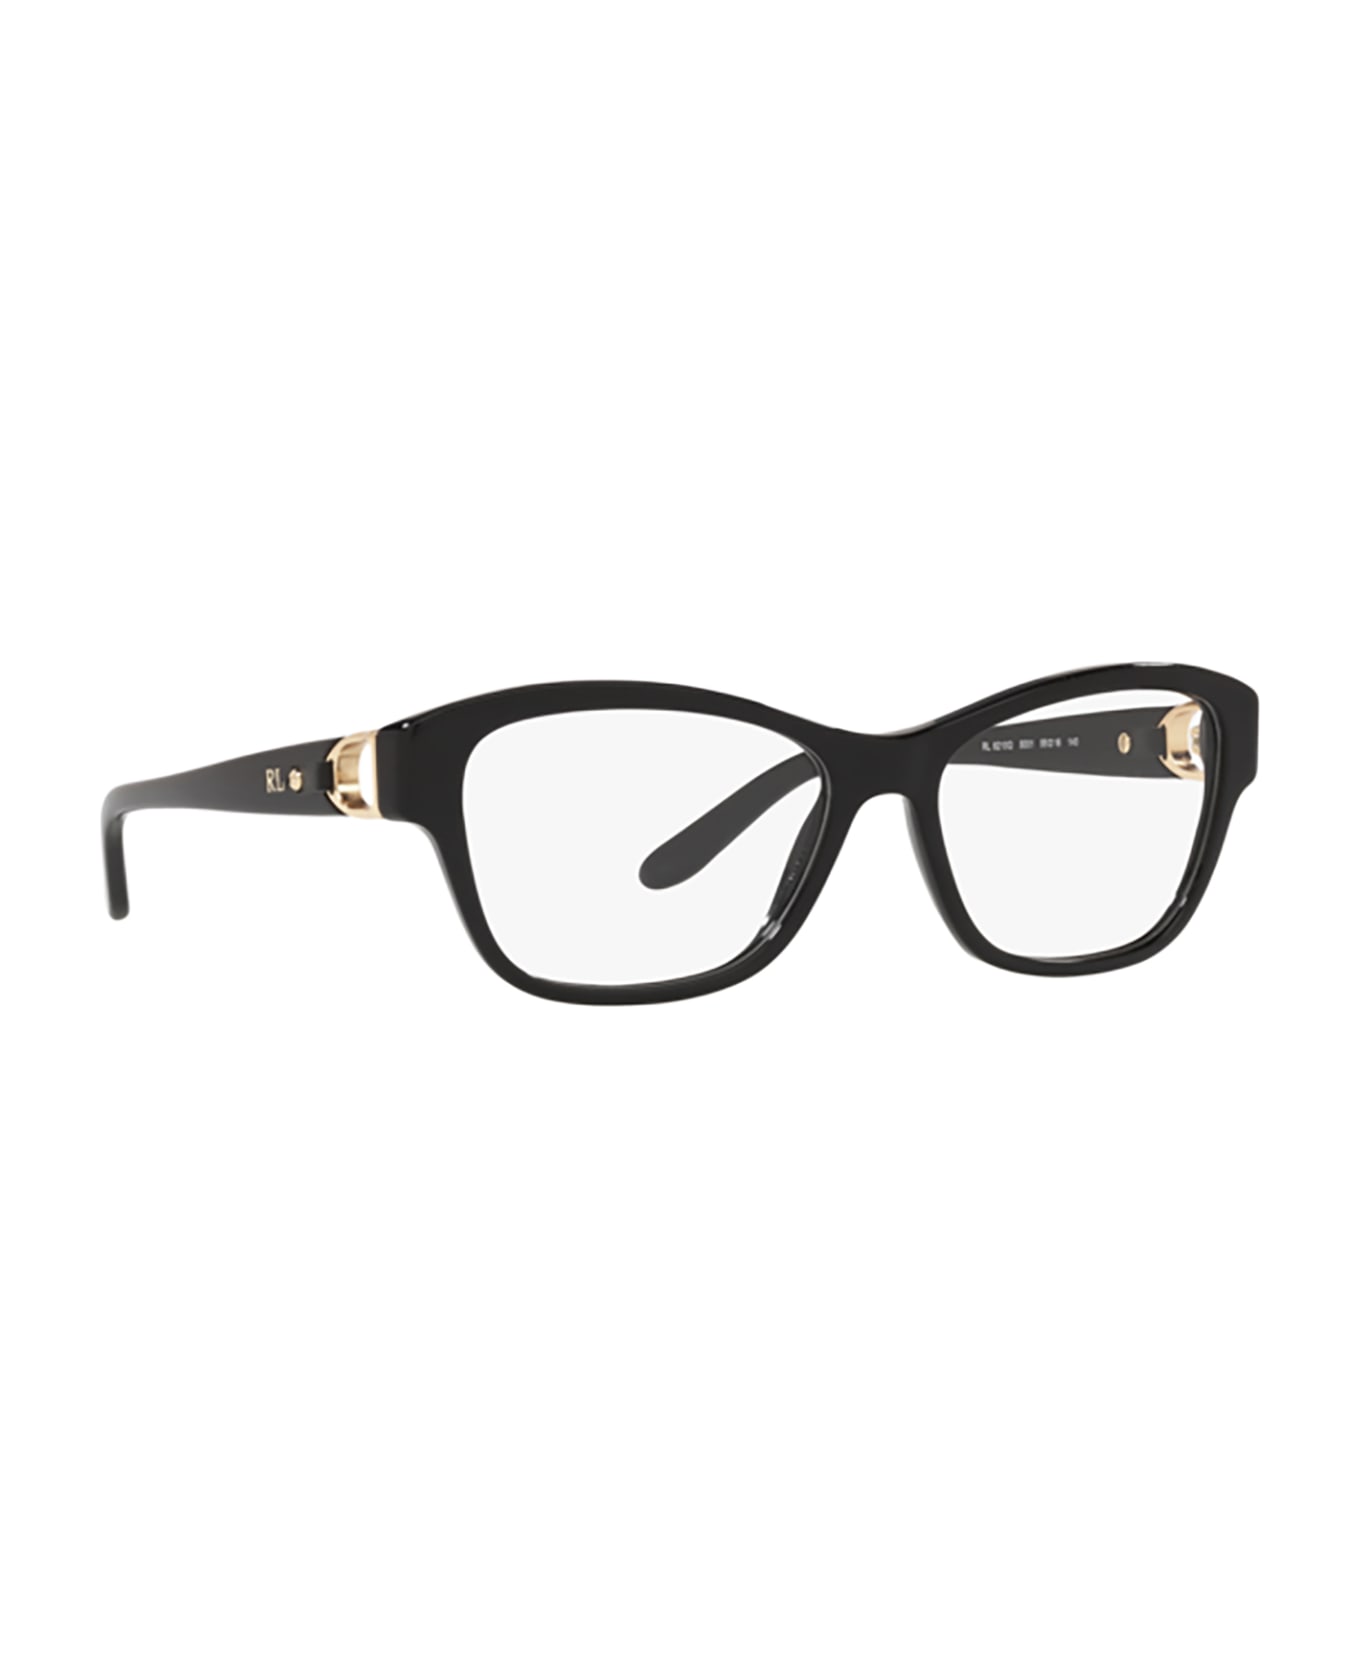 Ralph Lauren Rl6210q Shiny Black Glasses - Shiny Black